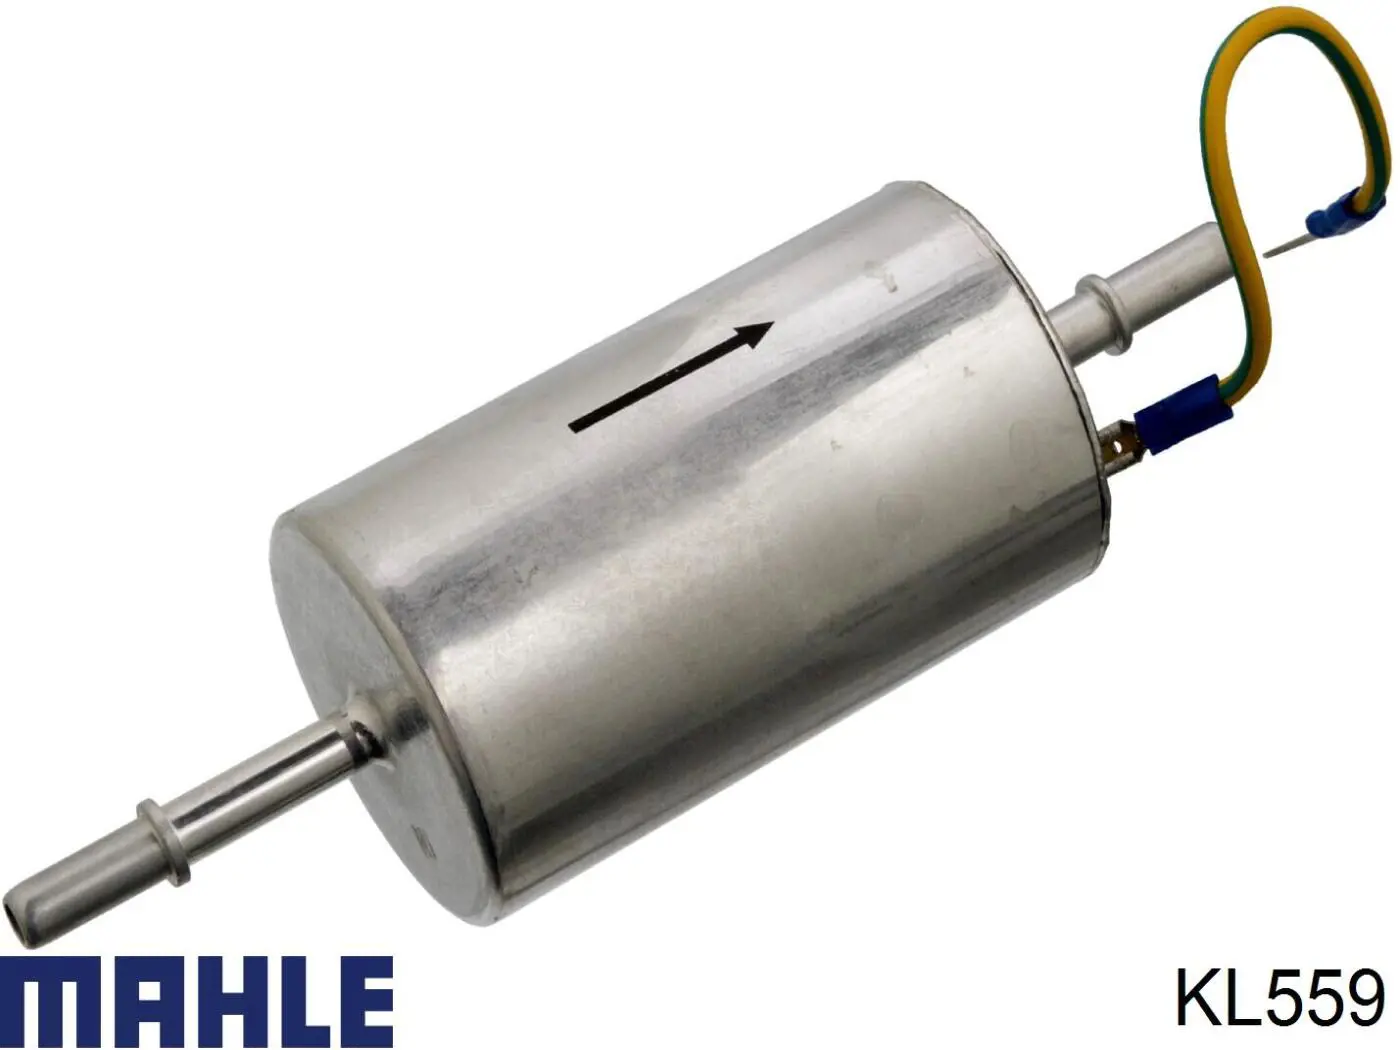 KL559 Mahle Original filtro combustible